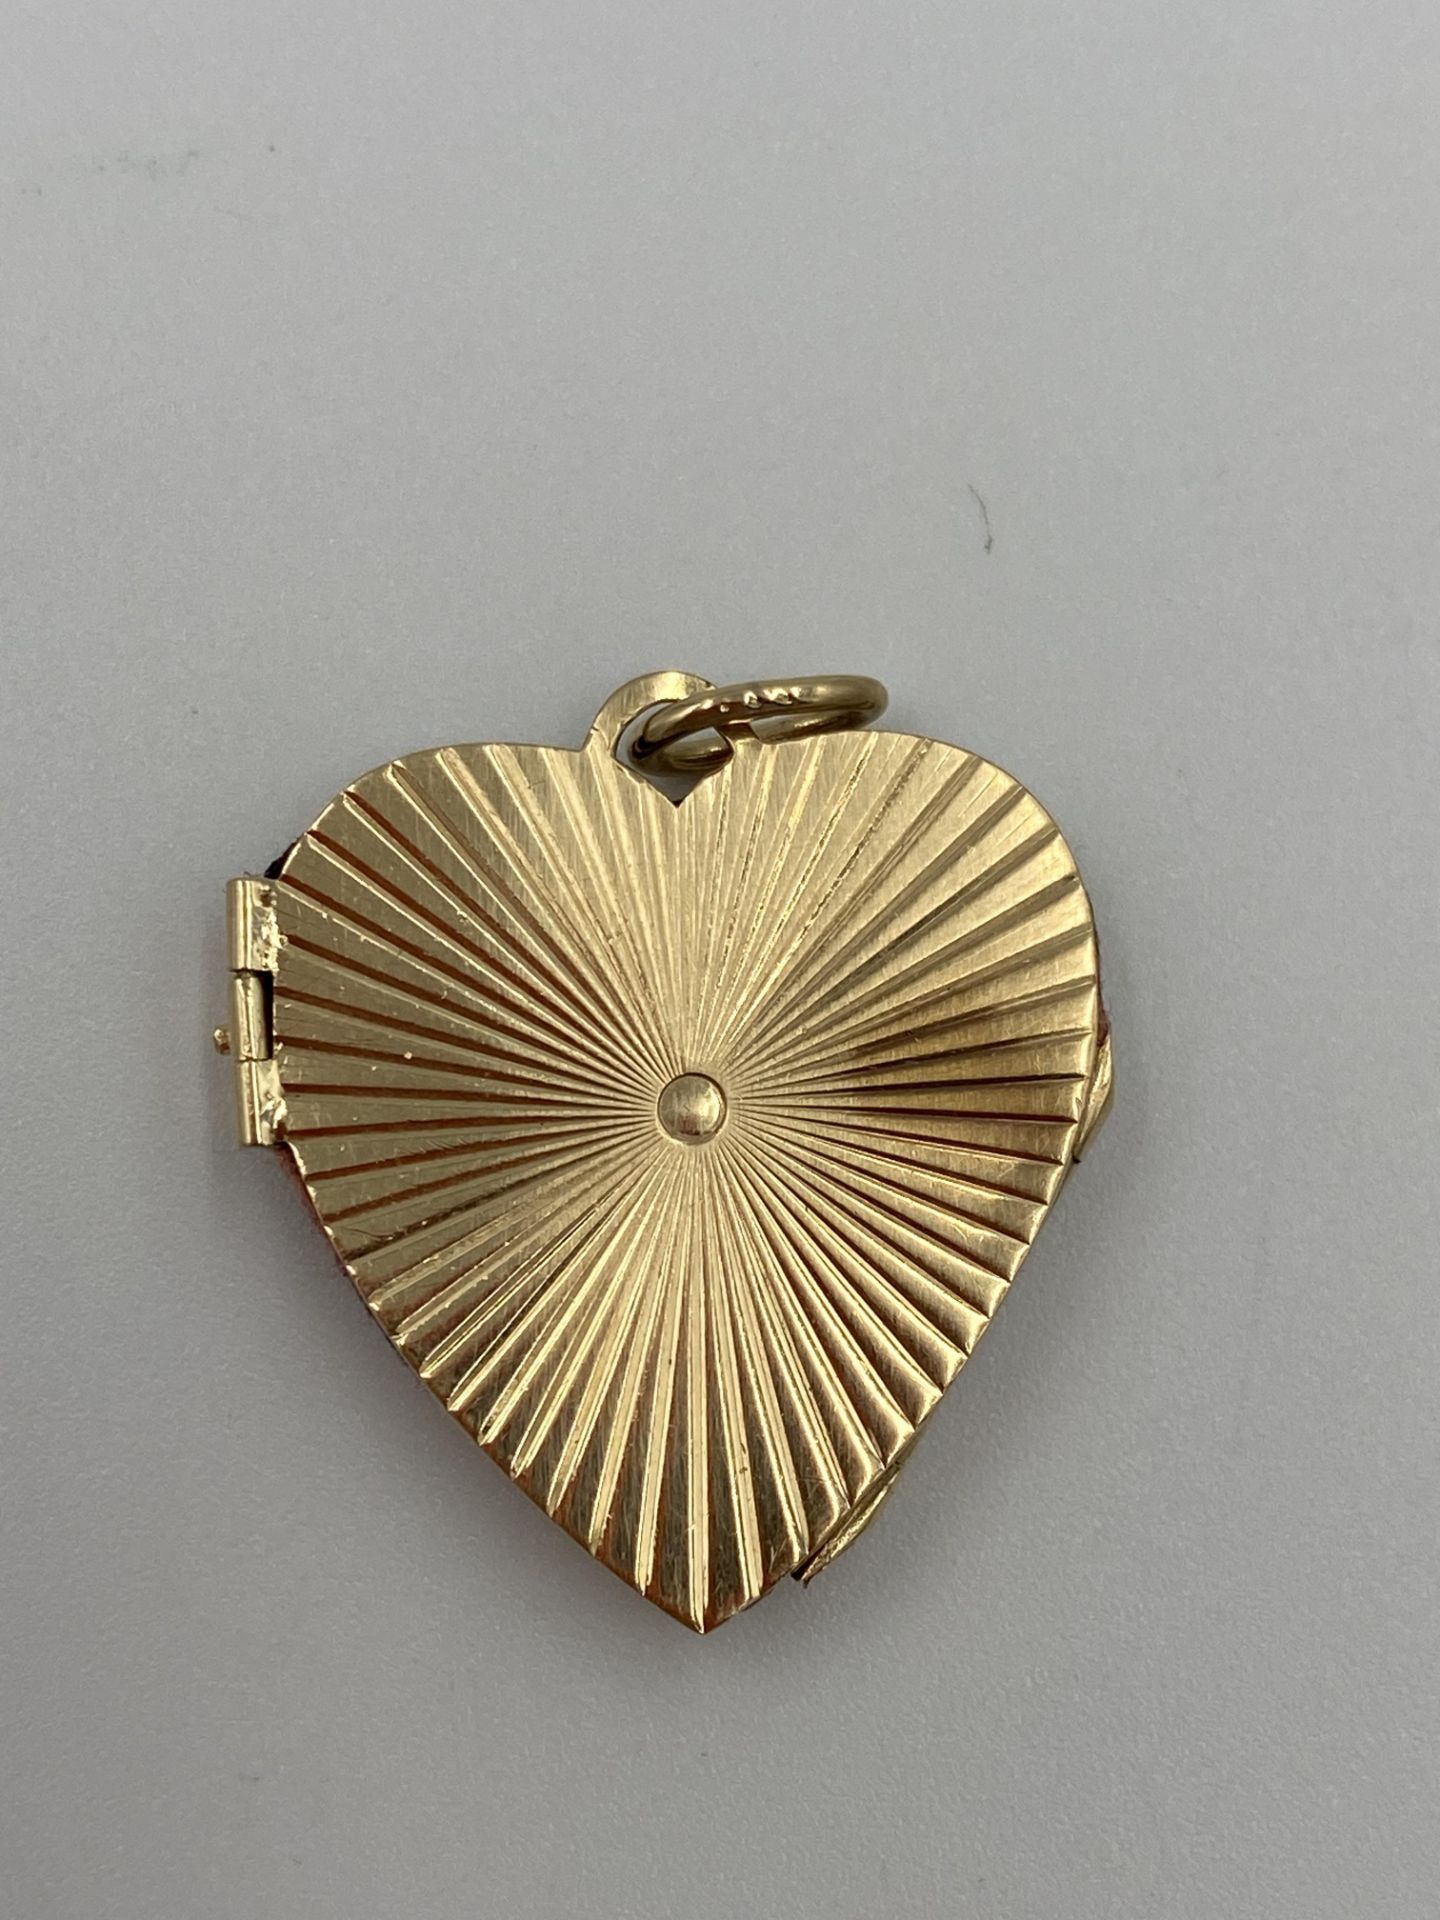 14ct gold and diamond locket - Image 2 of 4